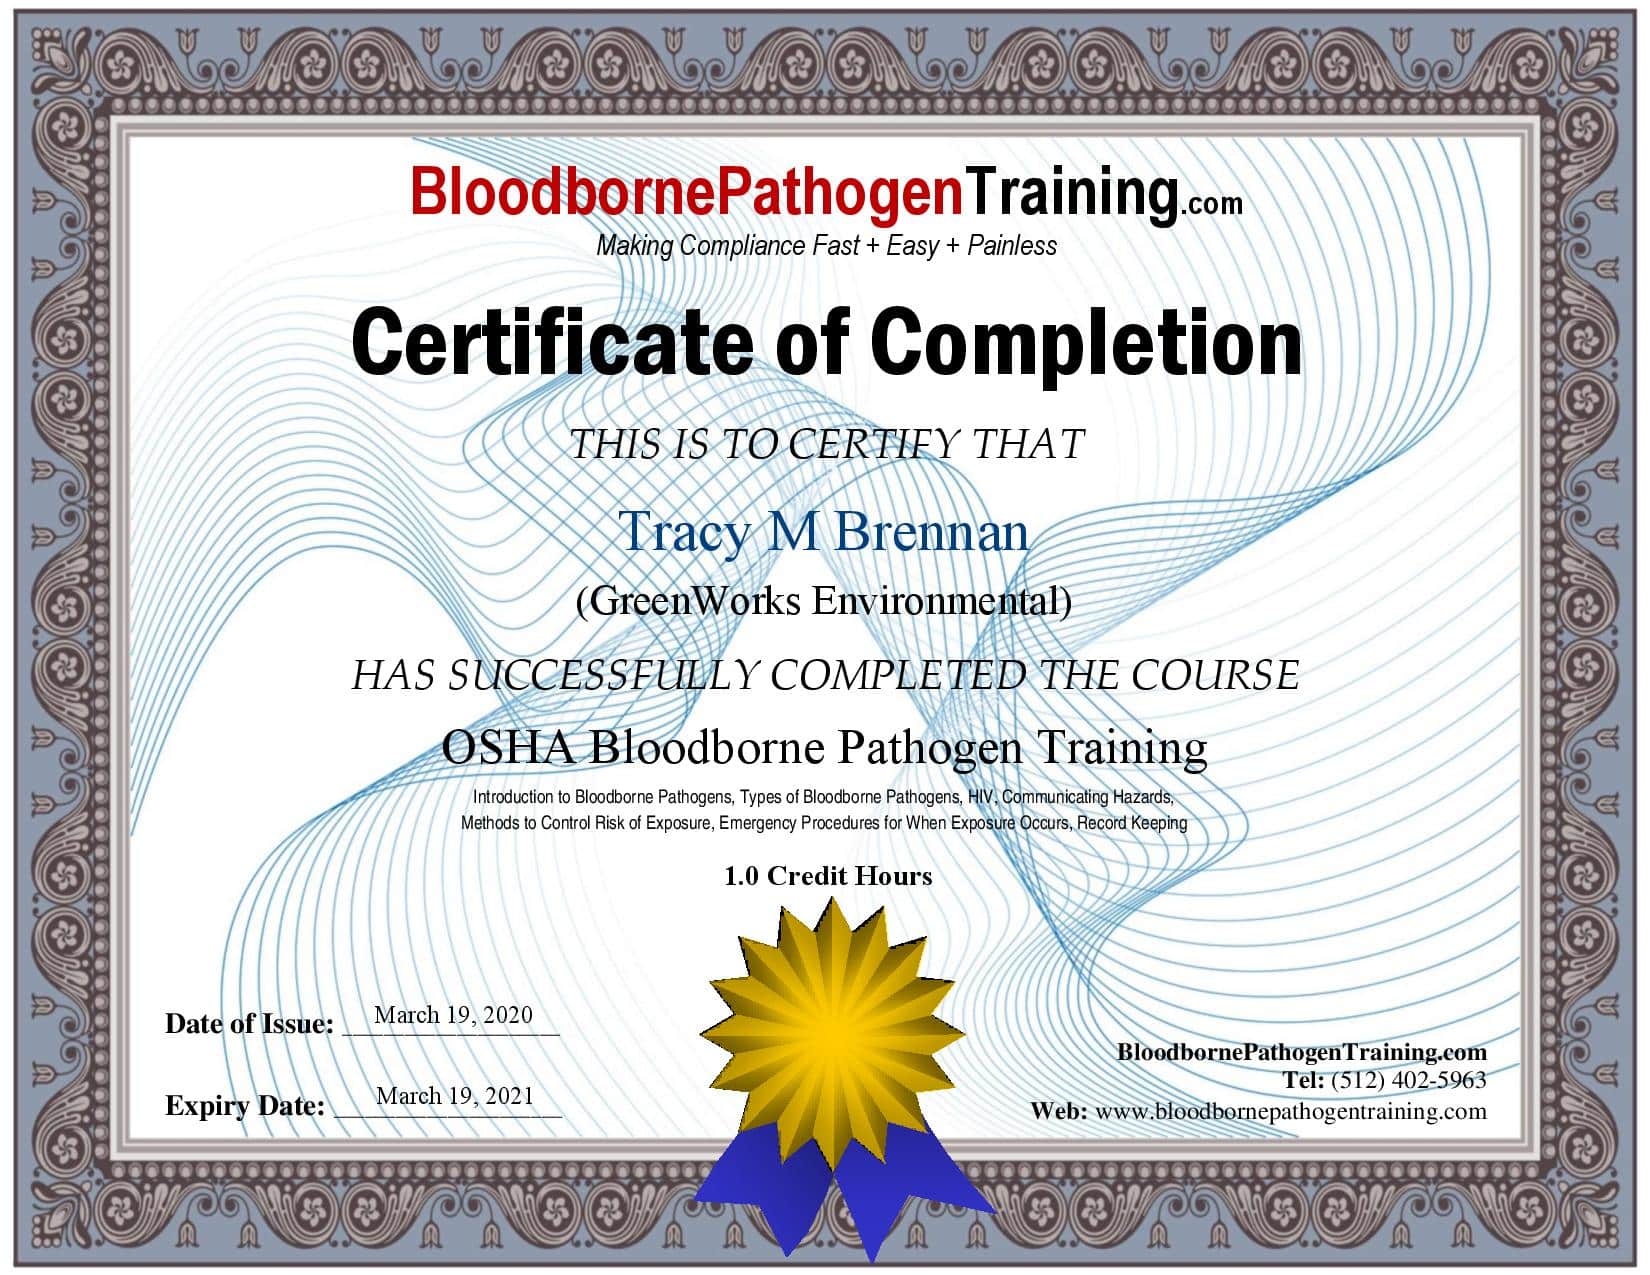 Tmb-cert-osha_bloodborne_pathogen_training